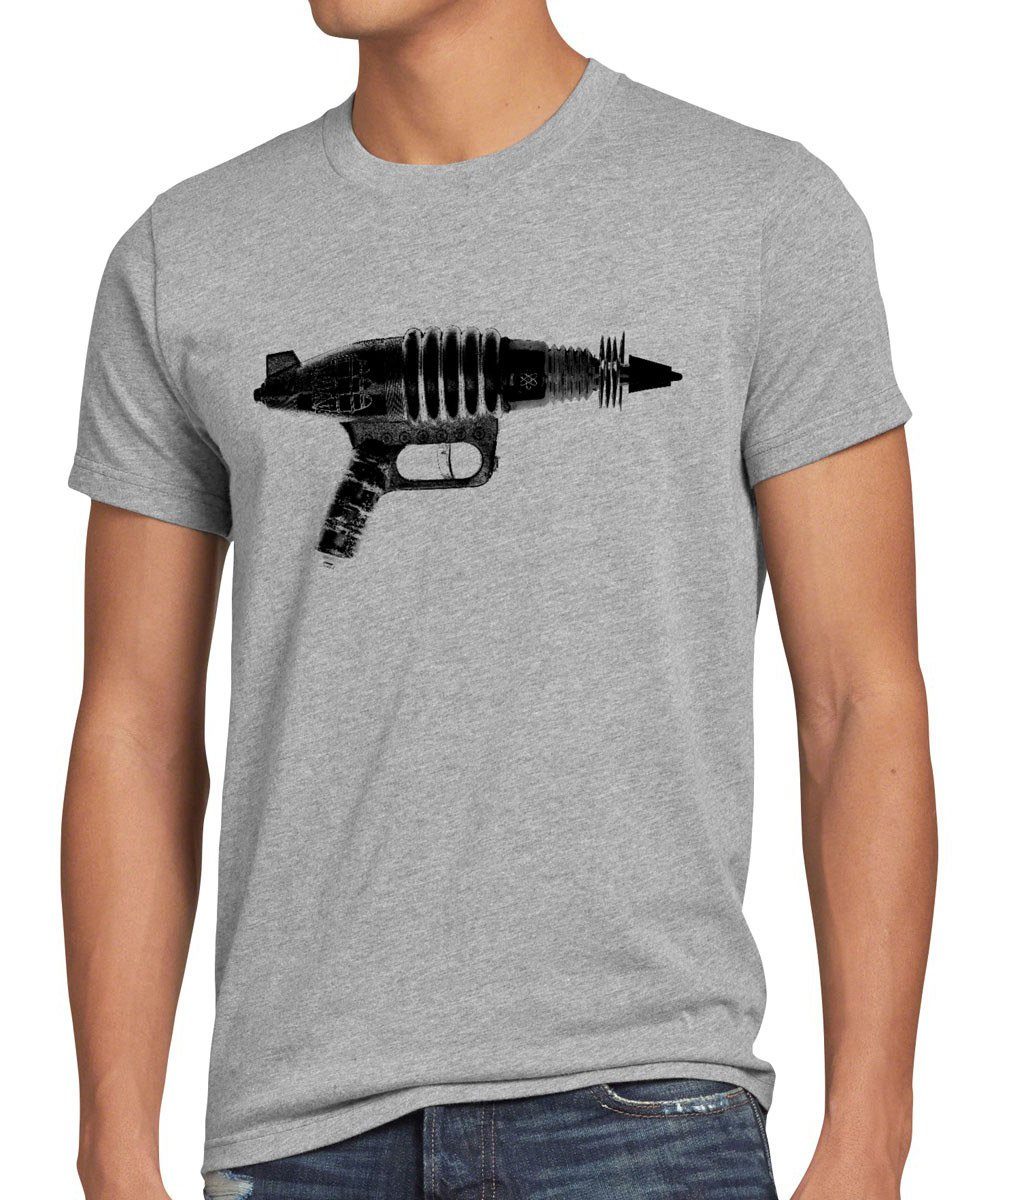 style3 Print-Shirt Herren T-Shirt Space Gun Big Bang Black Men Sheldon Alien Cooper SciFi Theory grau meliert